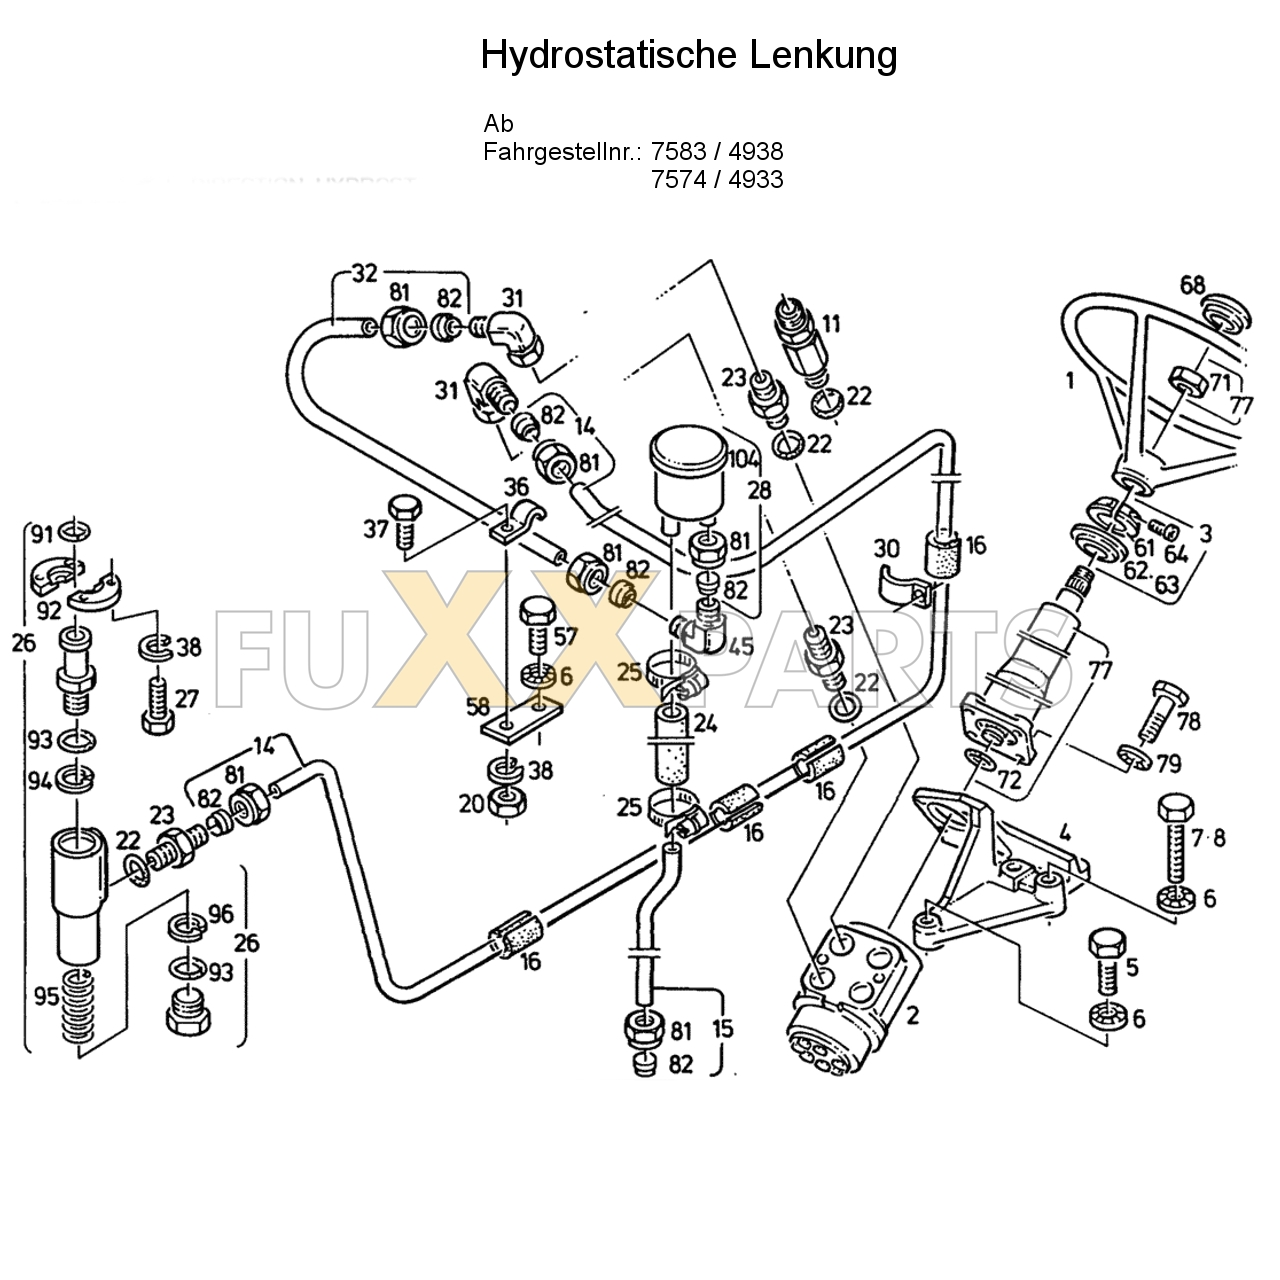 D 7207 Hydrostatische Lenkung 2.1